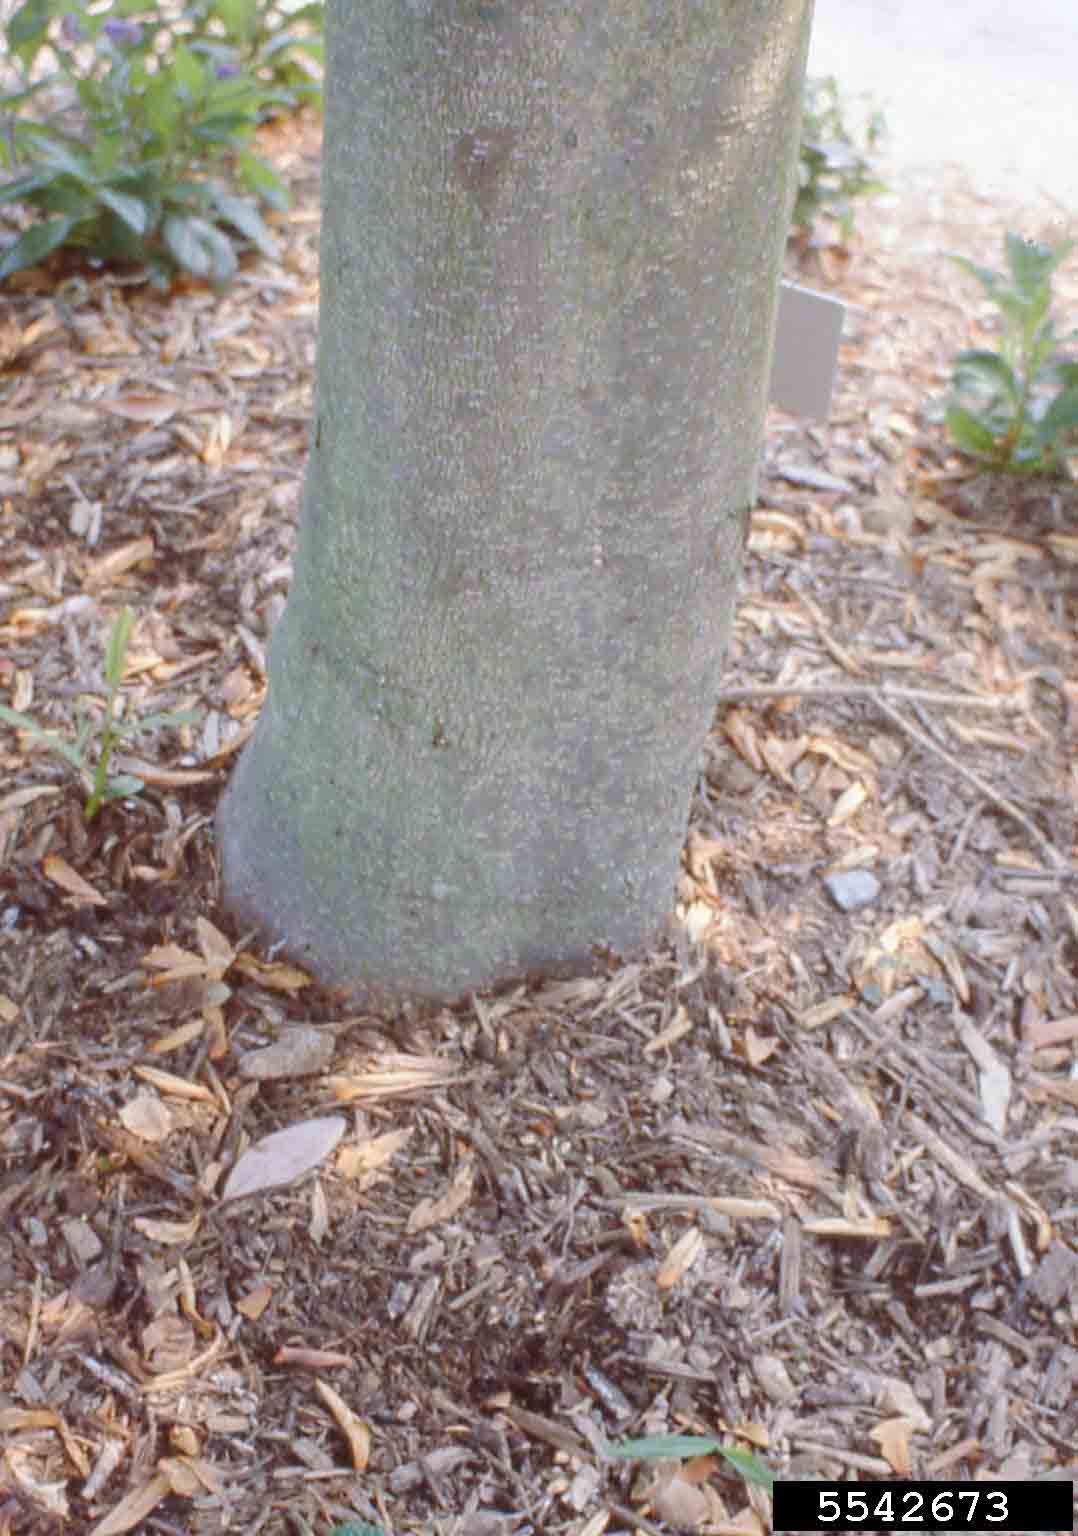 Sweetbay magnolia bark on trunk